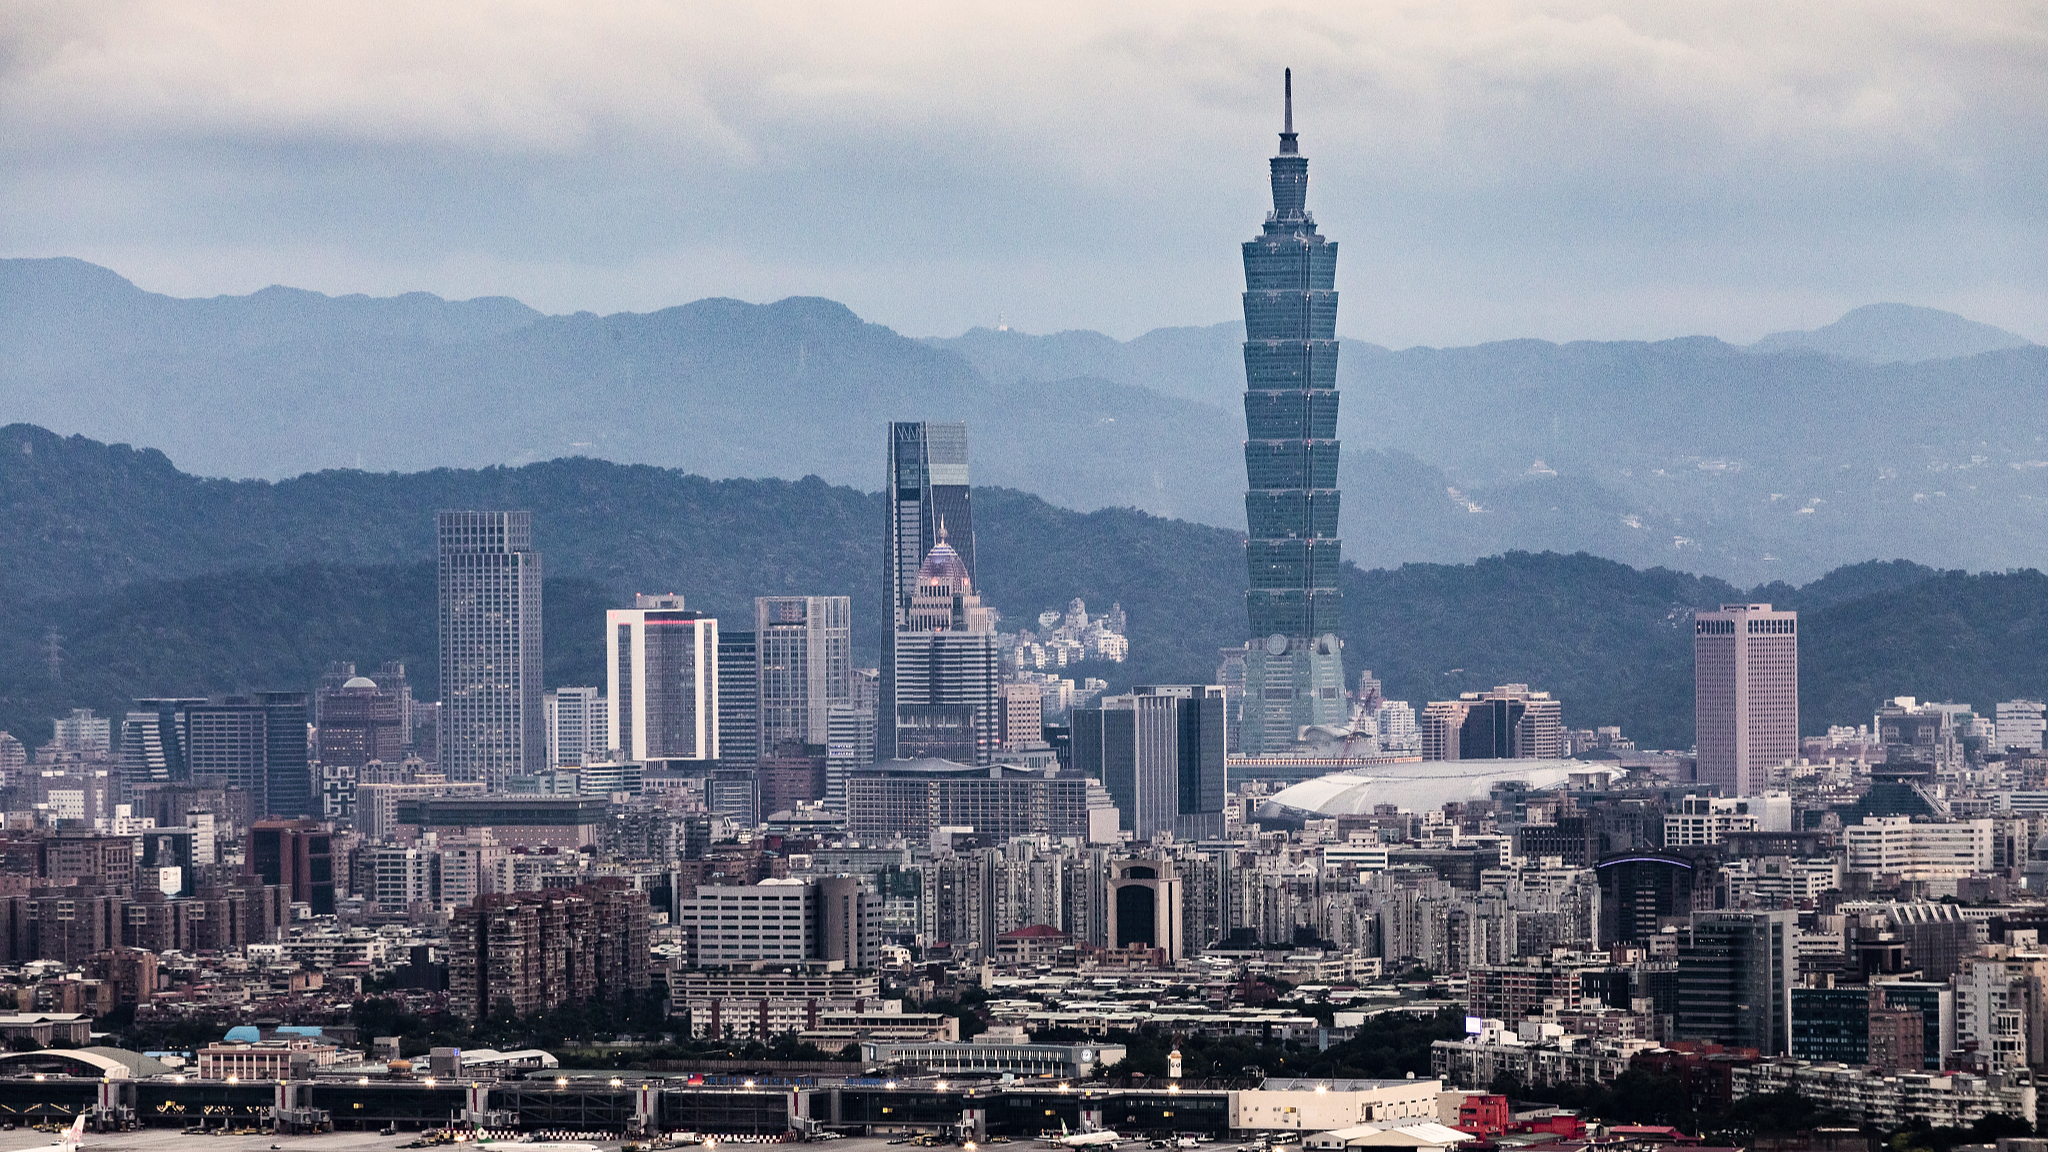 The Taipei 101 skyscraper in Taipei, southeast China's Taiwan, May 24, 2019. /CFP